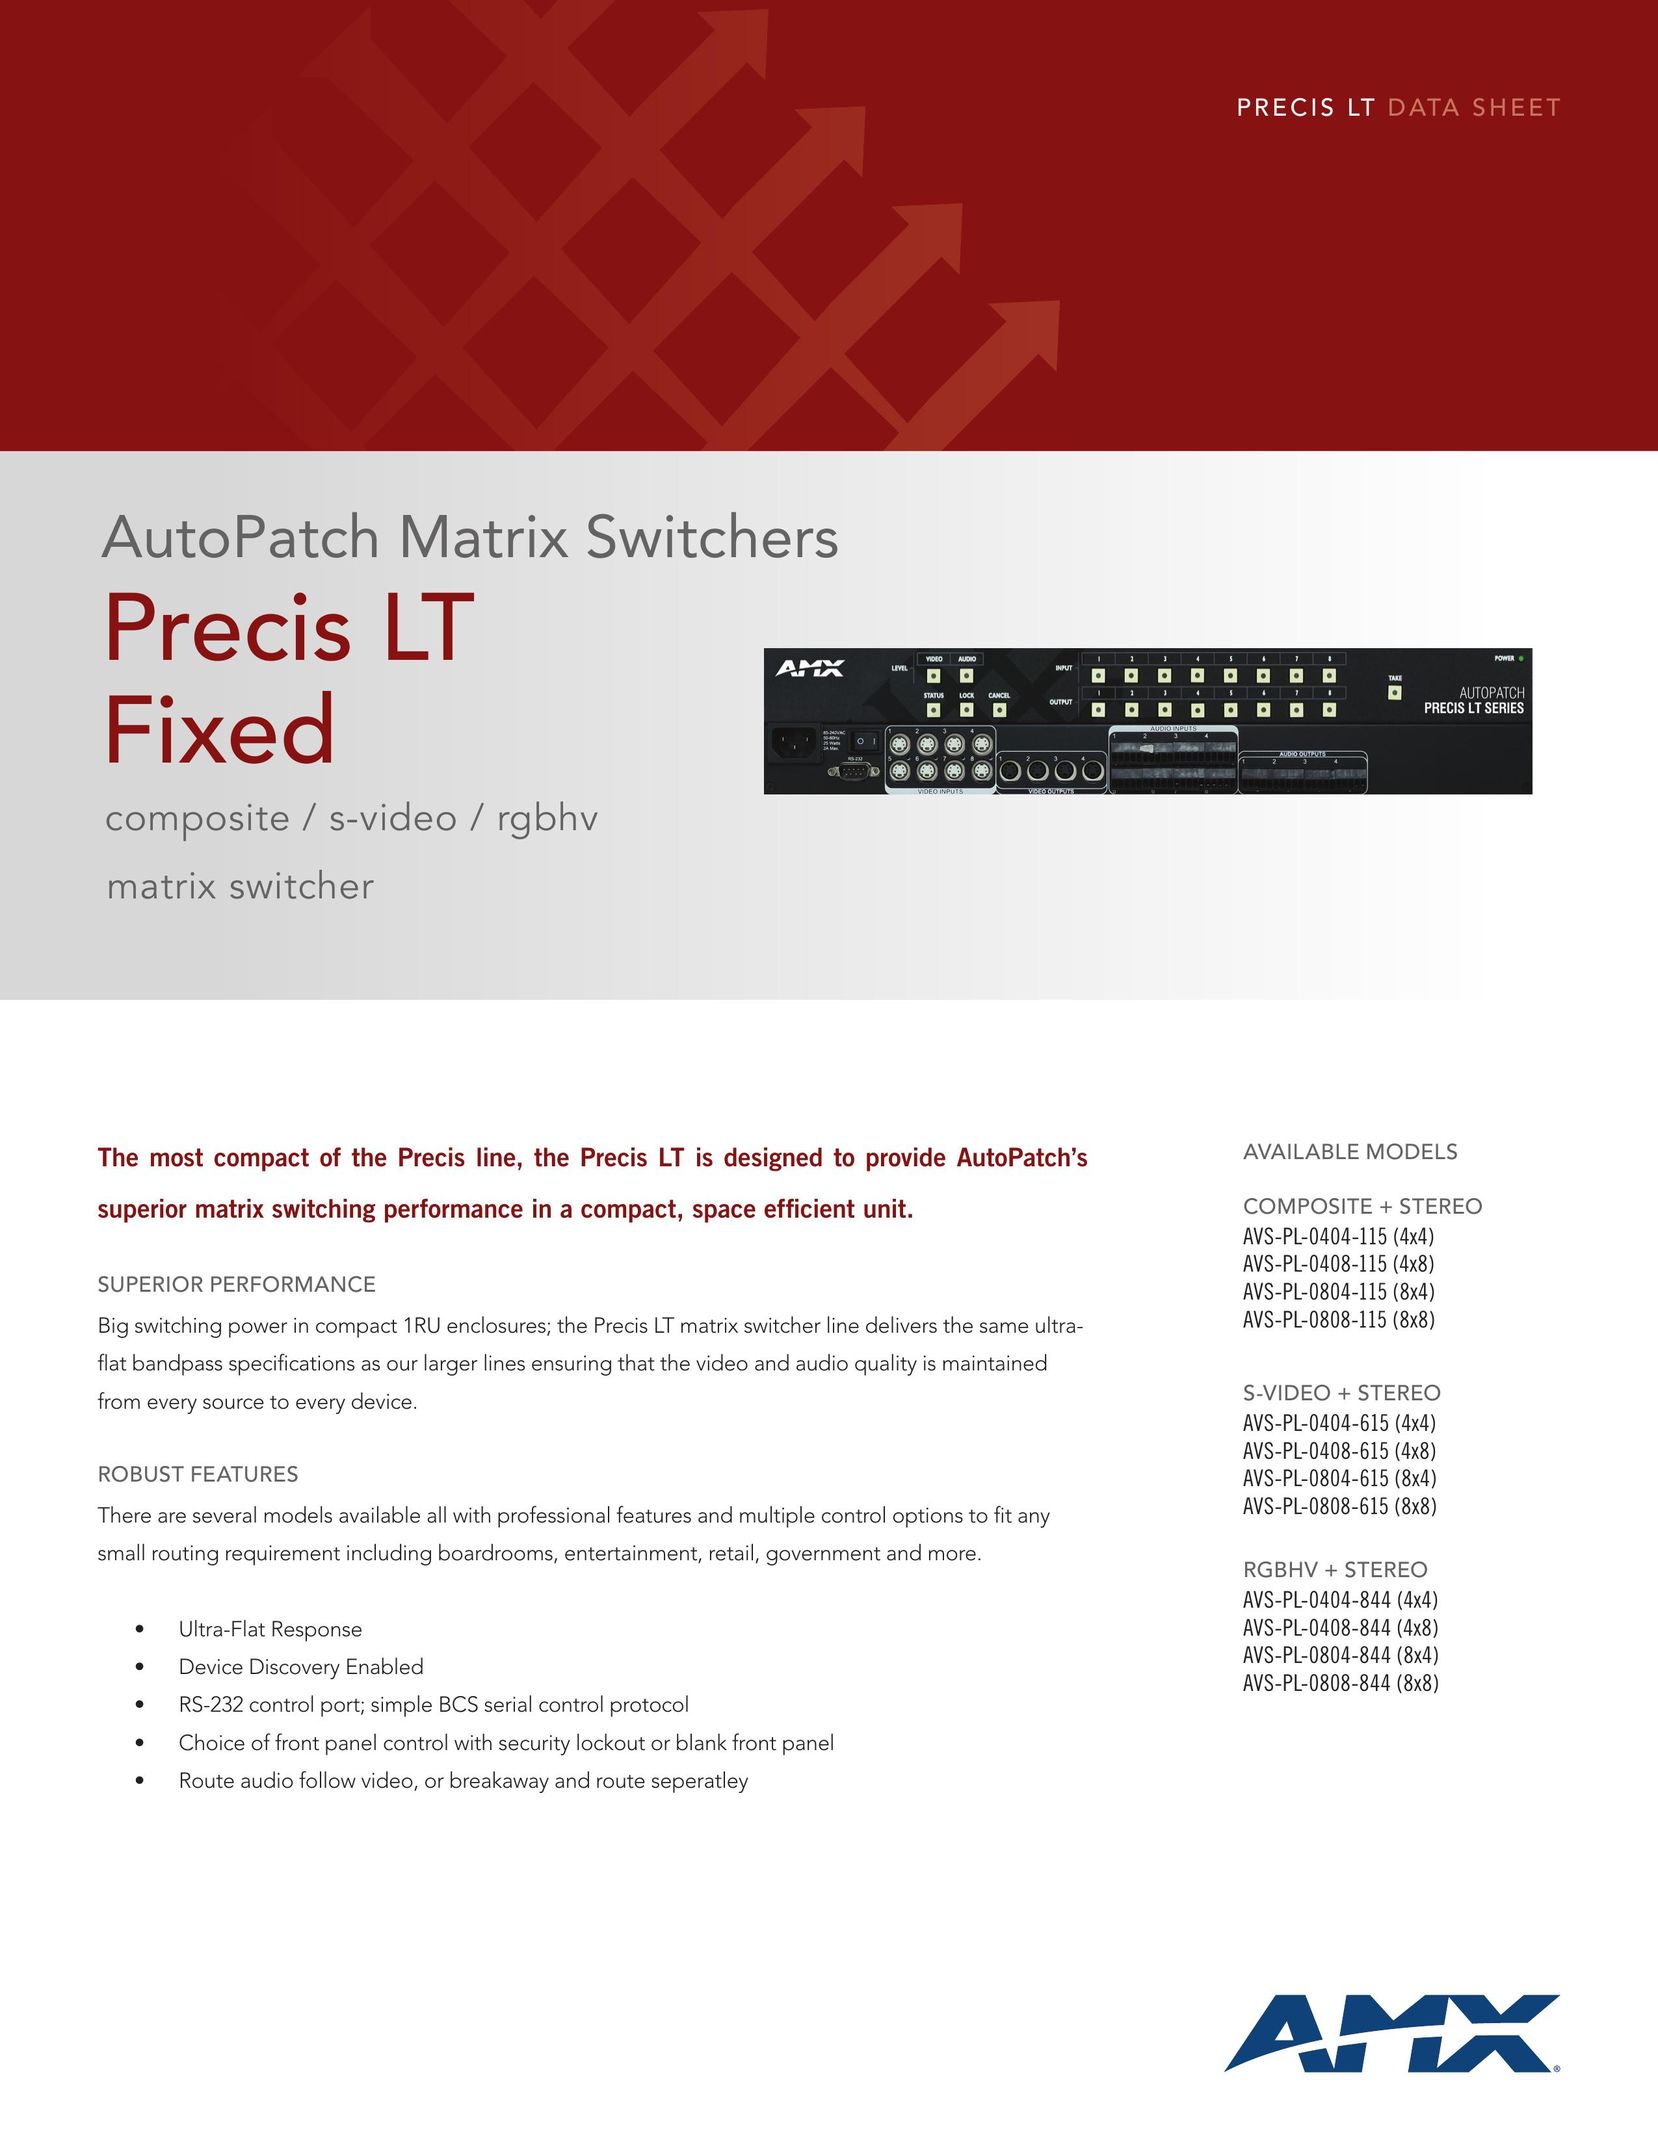 AMX AVS-PL-0804-844 Switch User Manual